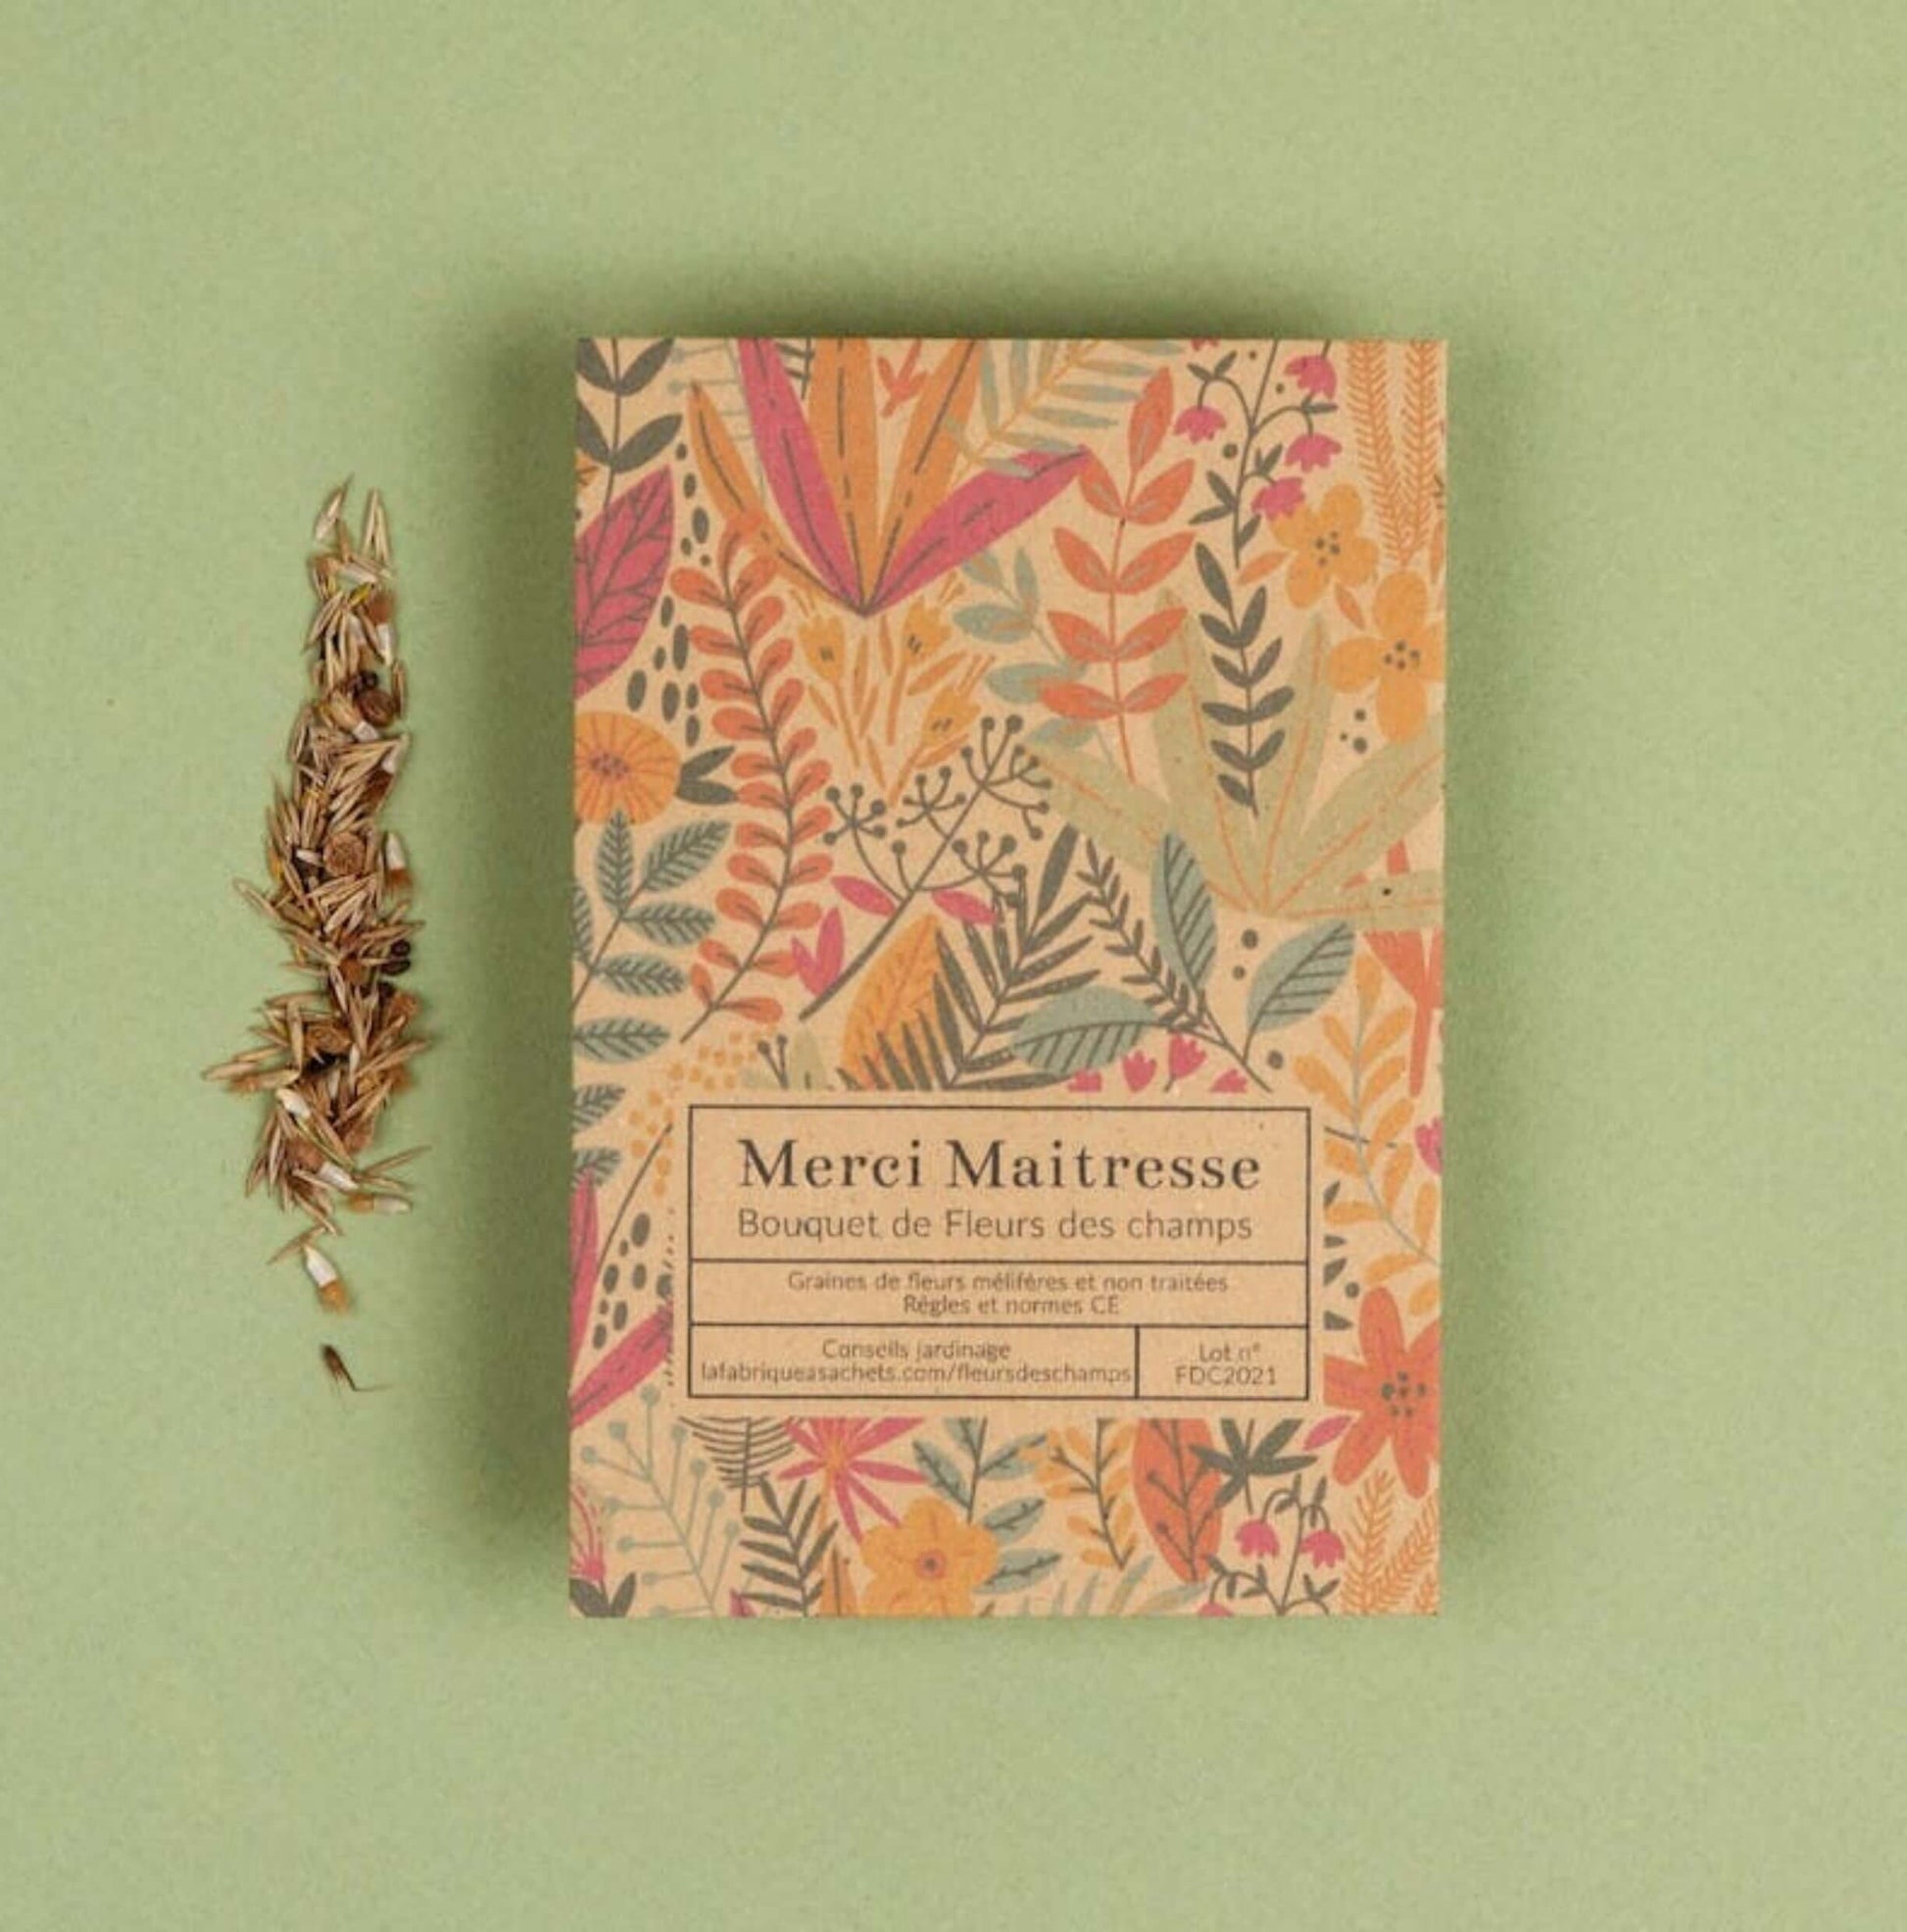 Merci maîtresse - seed bag wish card - Unik by Nature